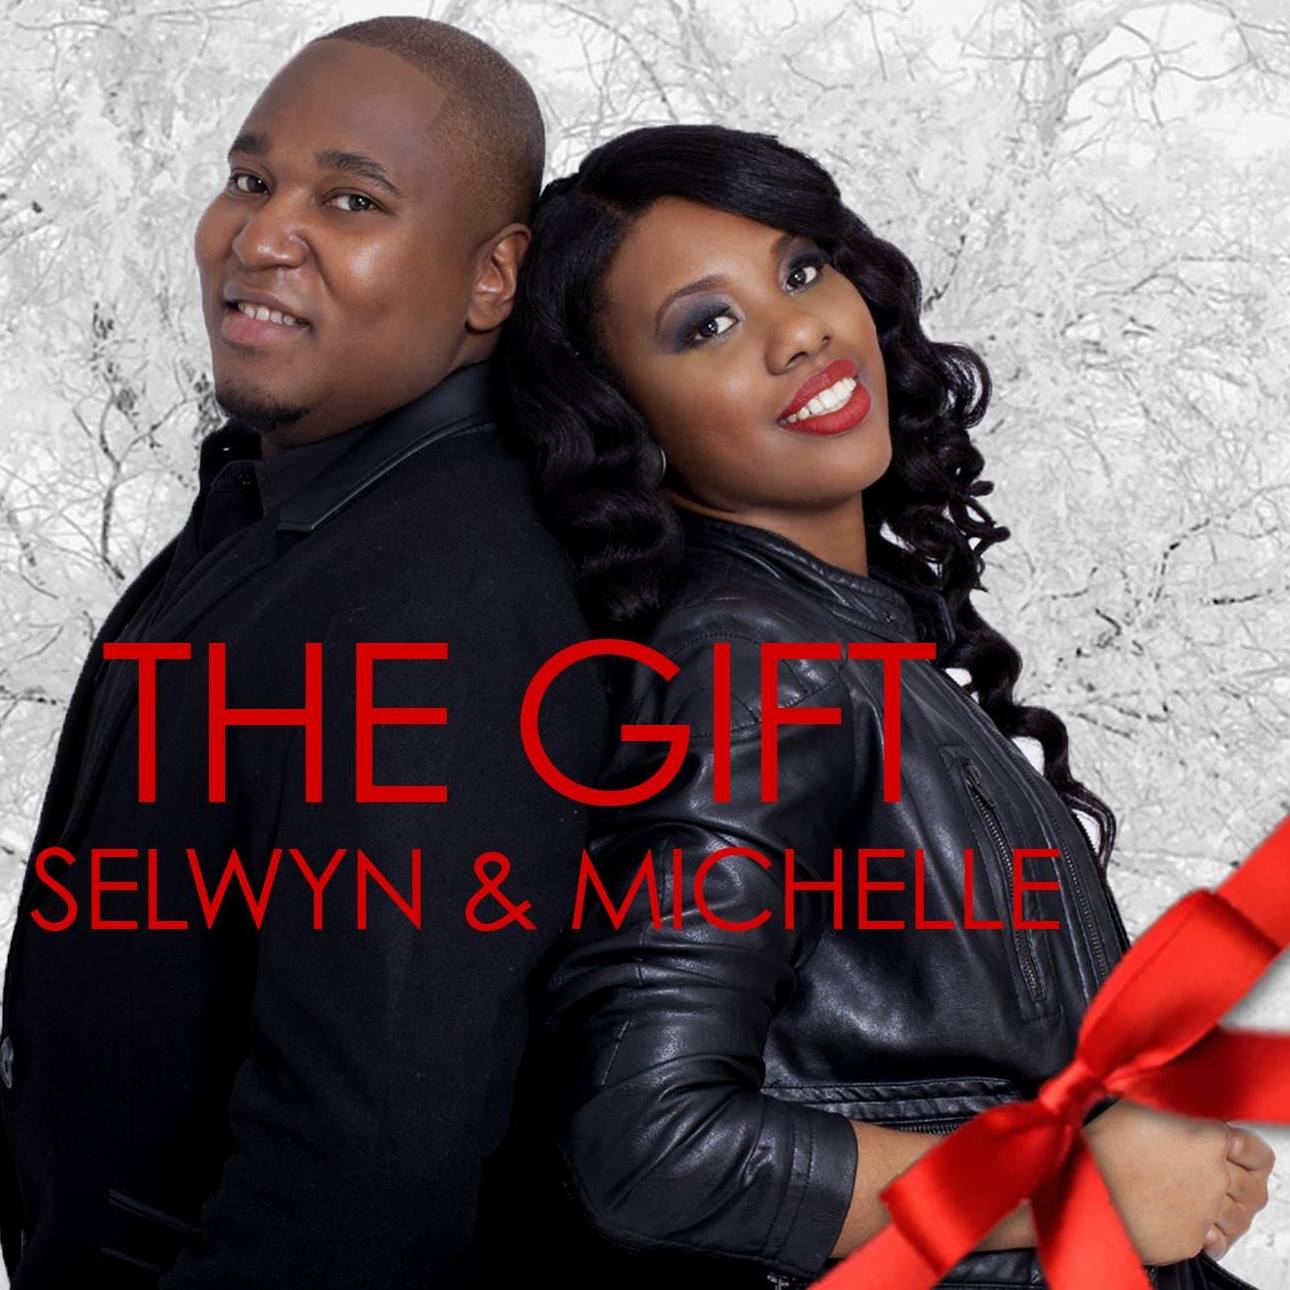 The Gift EP